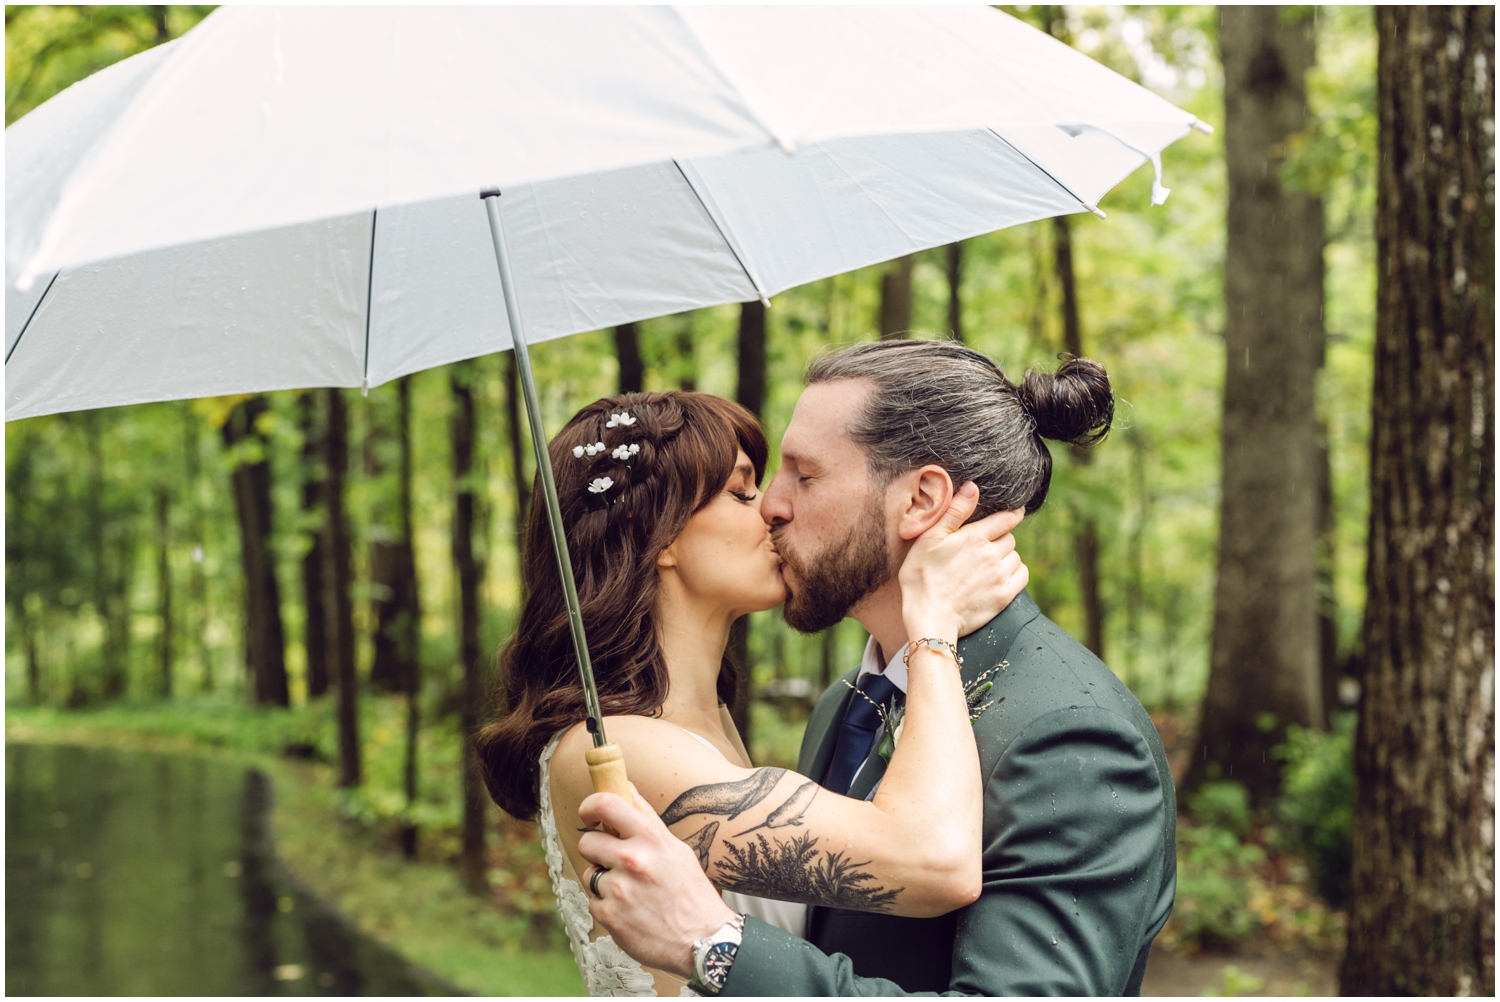 A bride and groom kiss under an umbrella at a rainy day wedding.